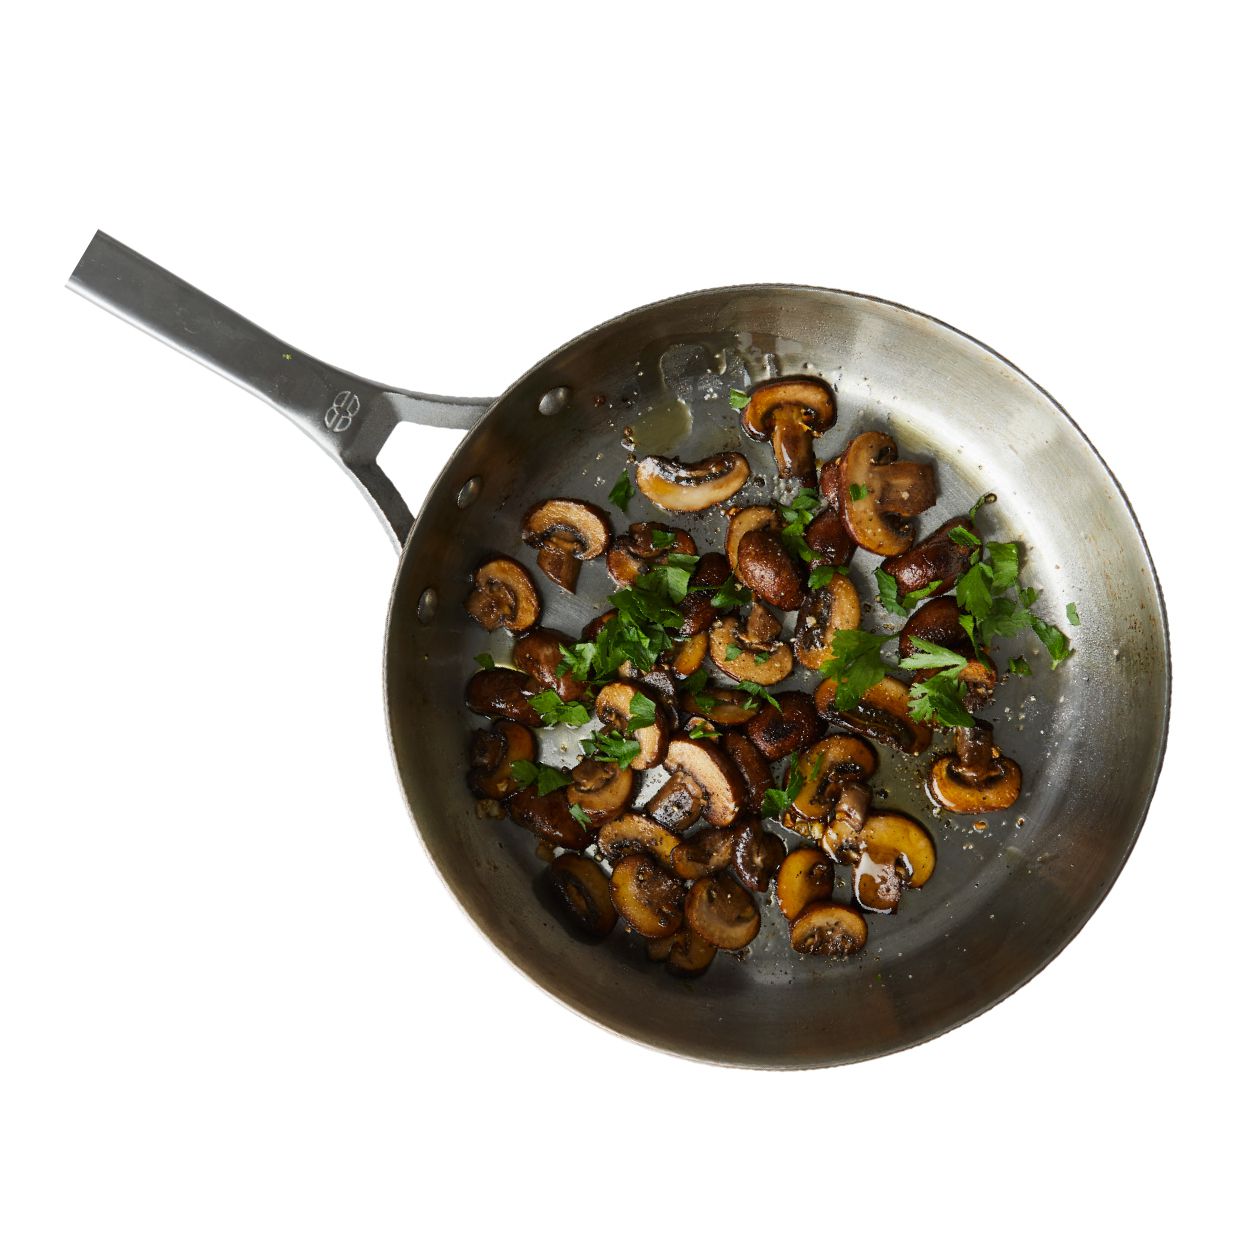 Sautee pan with mushrooms